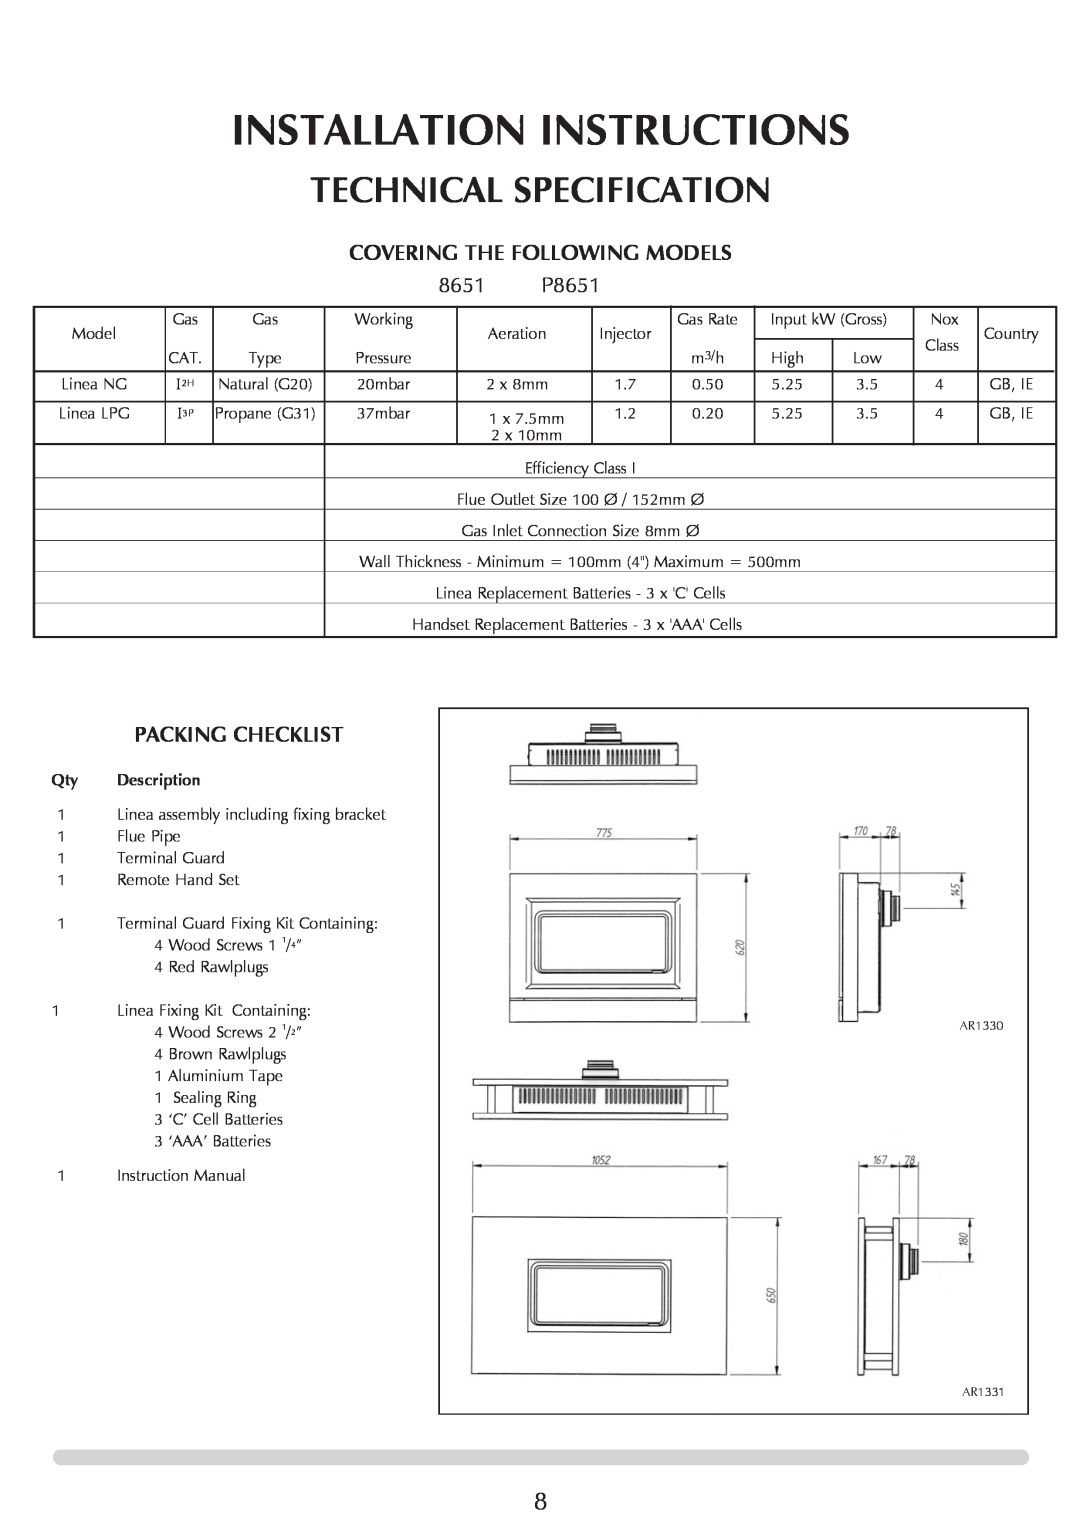 Stovax GAZCO Linea Balanced Flue Convector Fire manual Installation Instructions, Technical Specification, P8651 